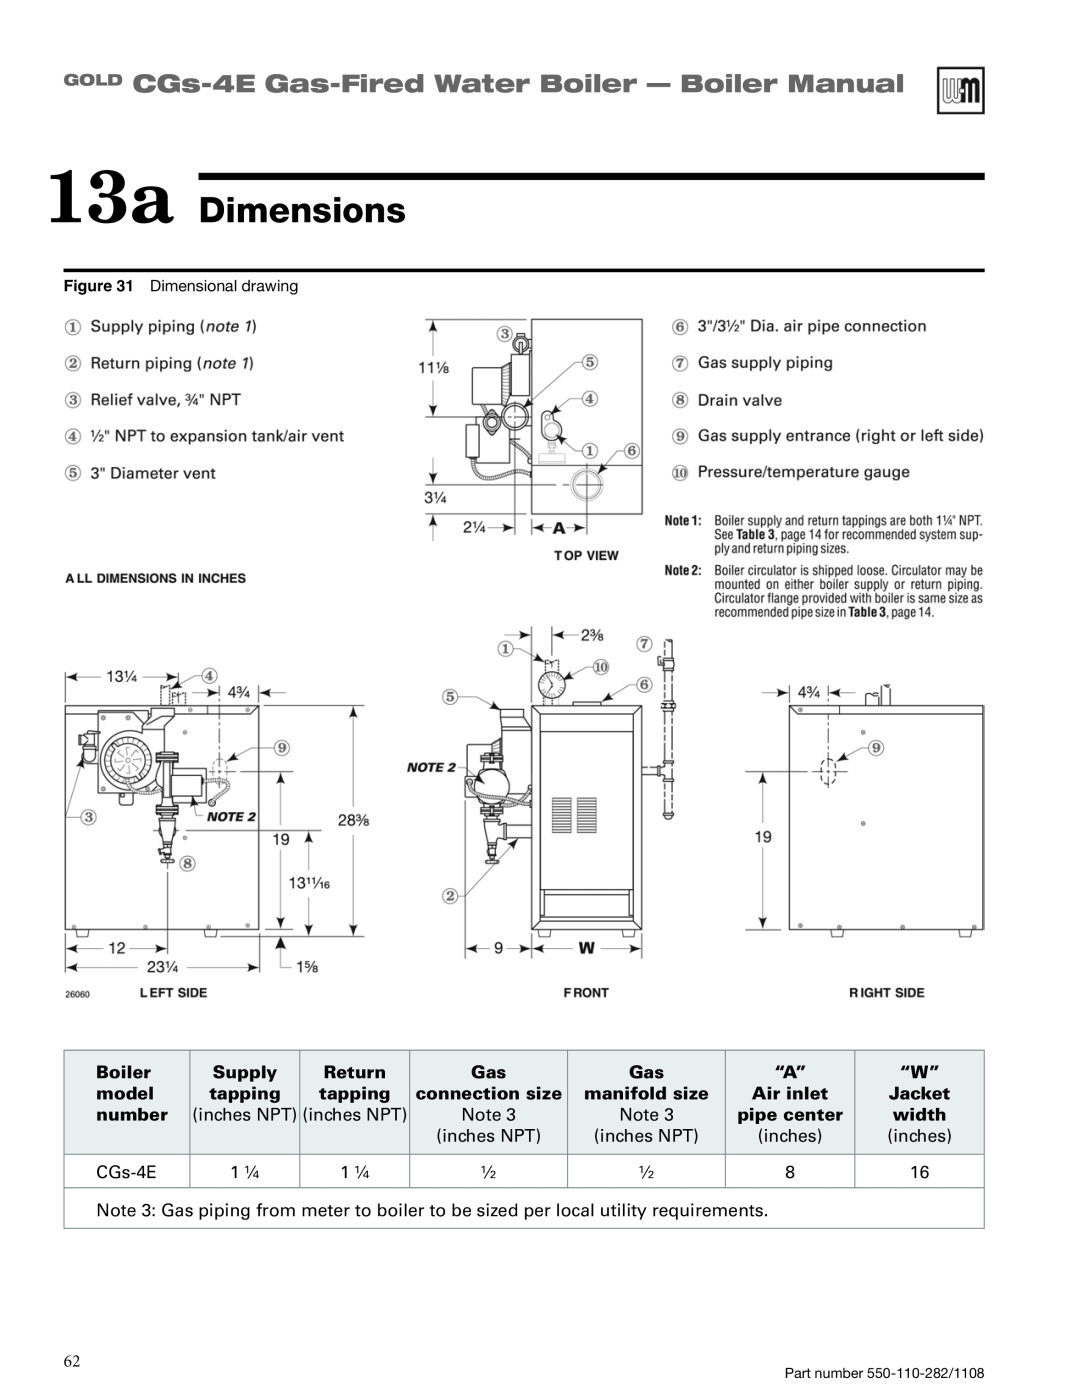 Weil-McLain CGS-4E manual 13a Dimensions, GOLD CGs-4E Gas-FiredWater Boiler - Boiler Manual 